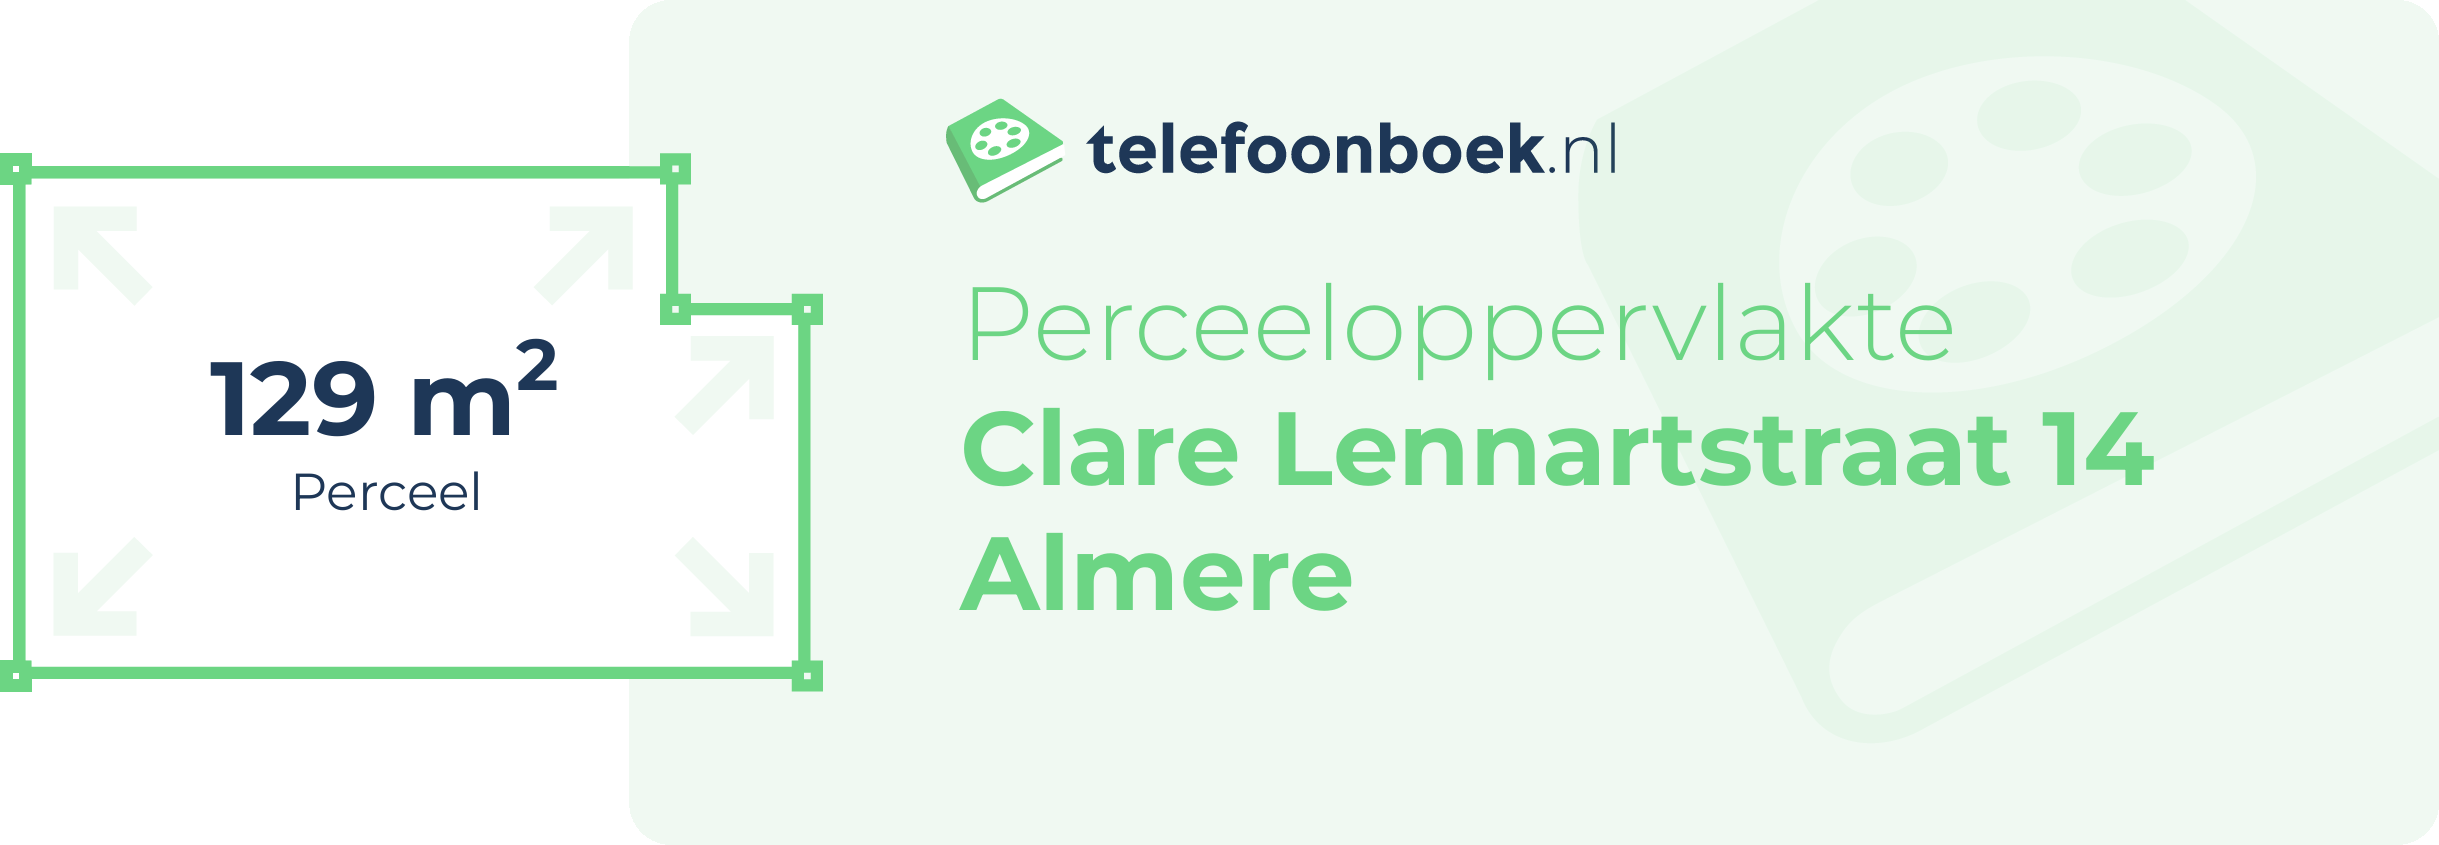 Perceeloppervlakte Clare Lennartstraat 14 Almere